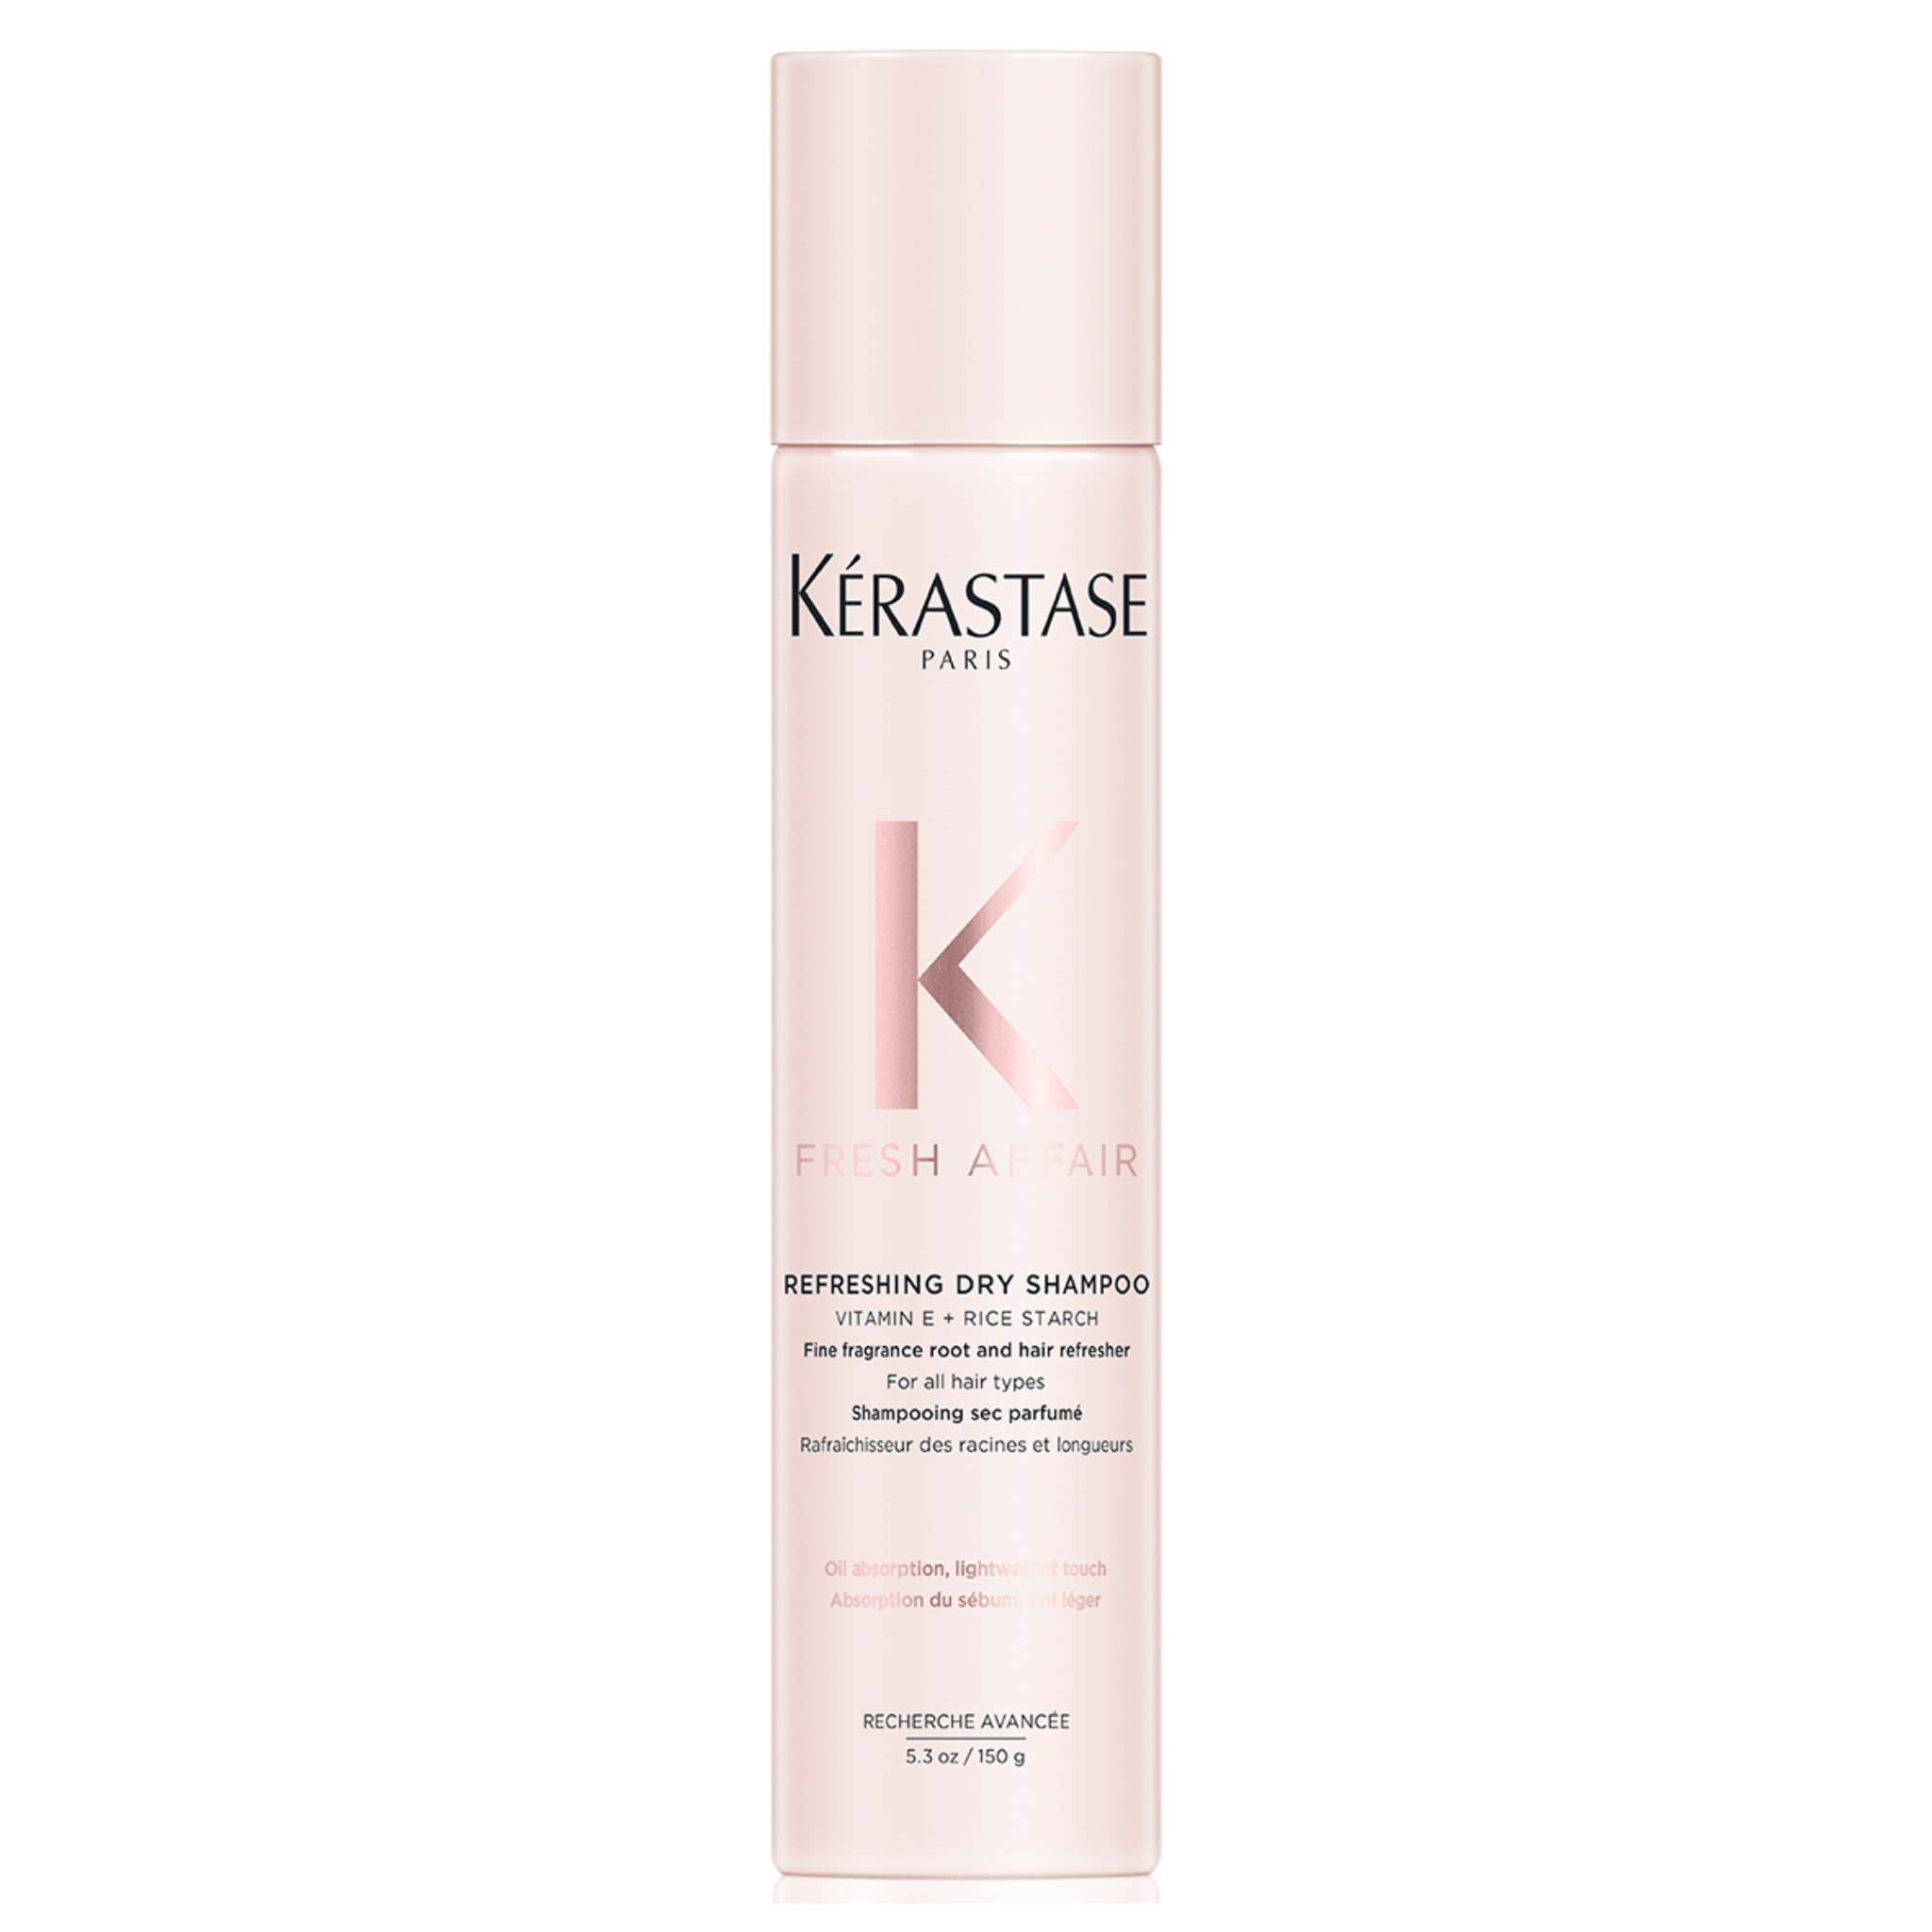 Kérastase. Fresh Affair Shampoing Sec Parfumé - 150 g - Concept C. Shop